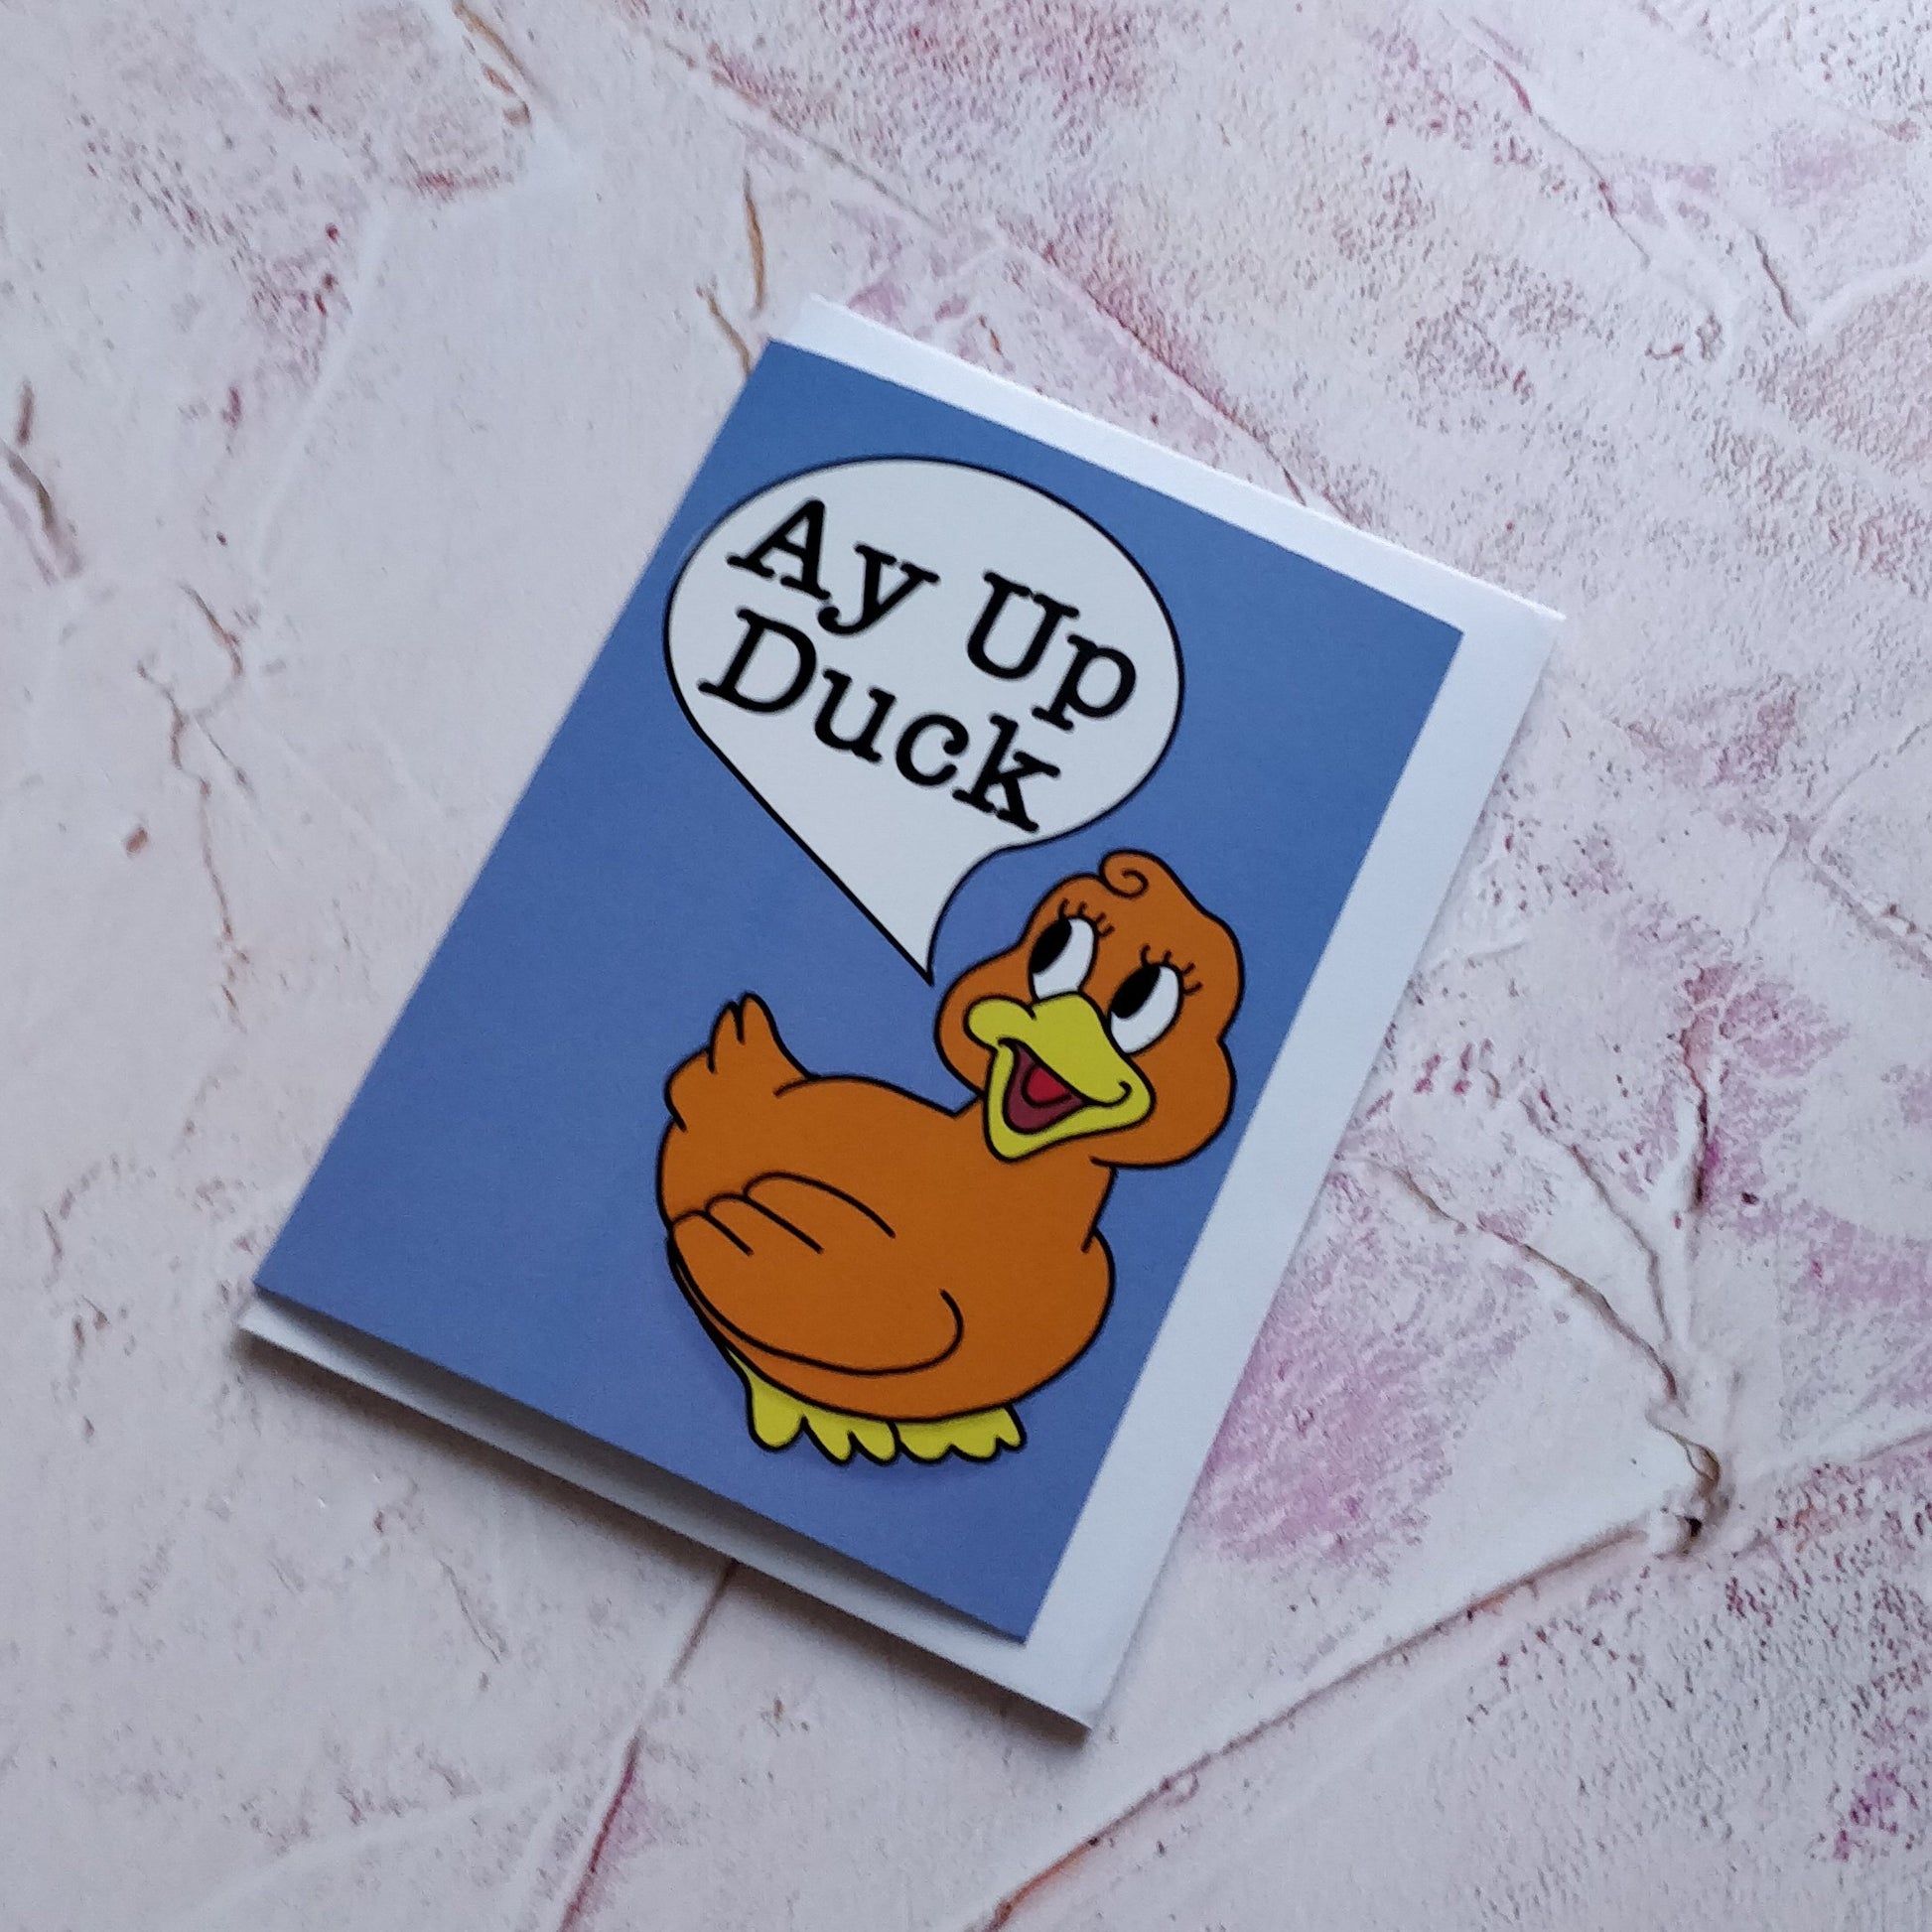 Ay Up Duck Illustrated Greeting Card - Fay Dixon Design